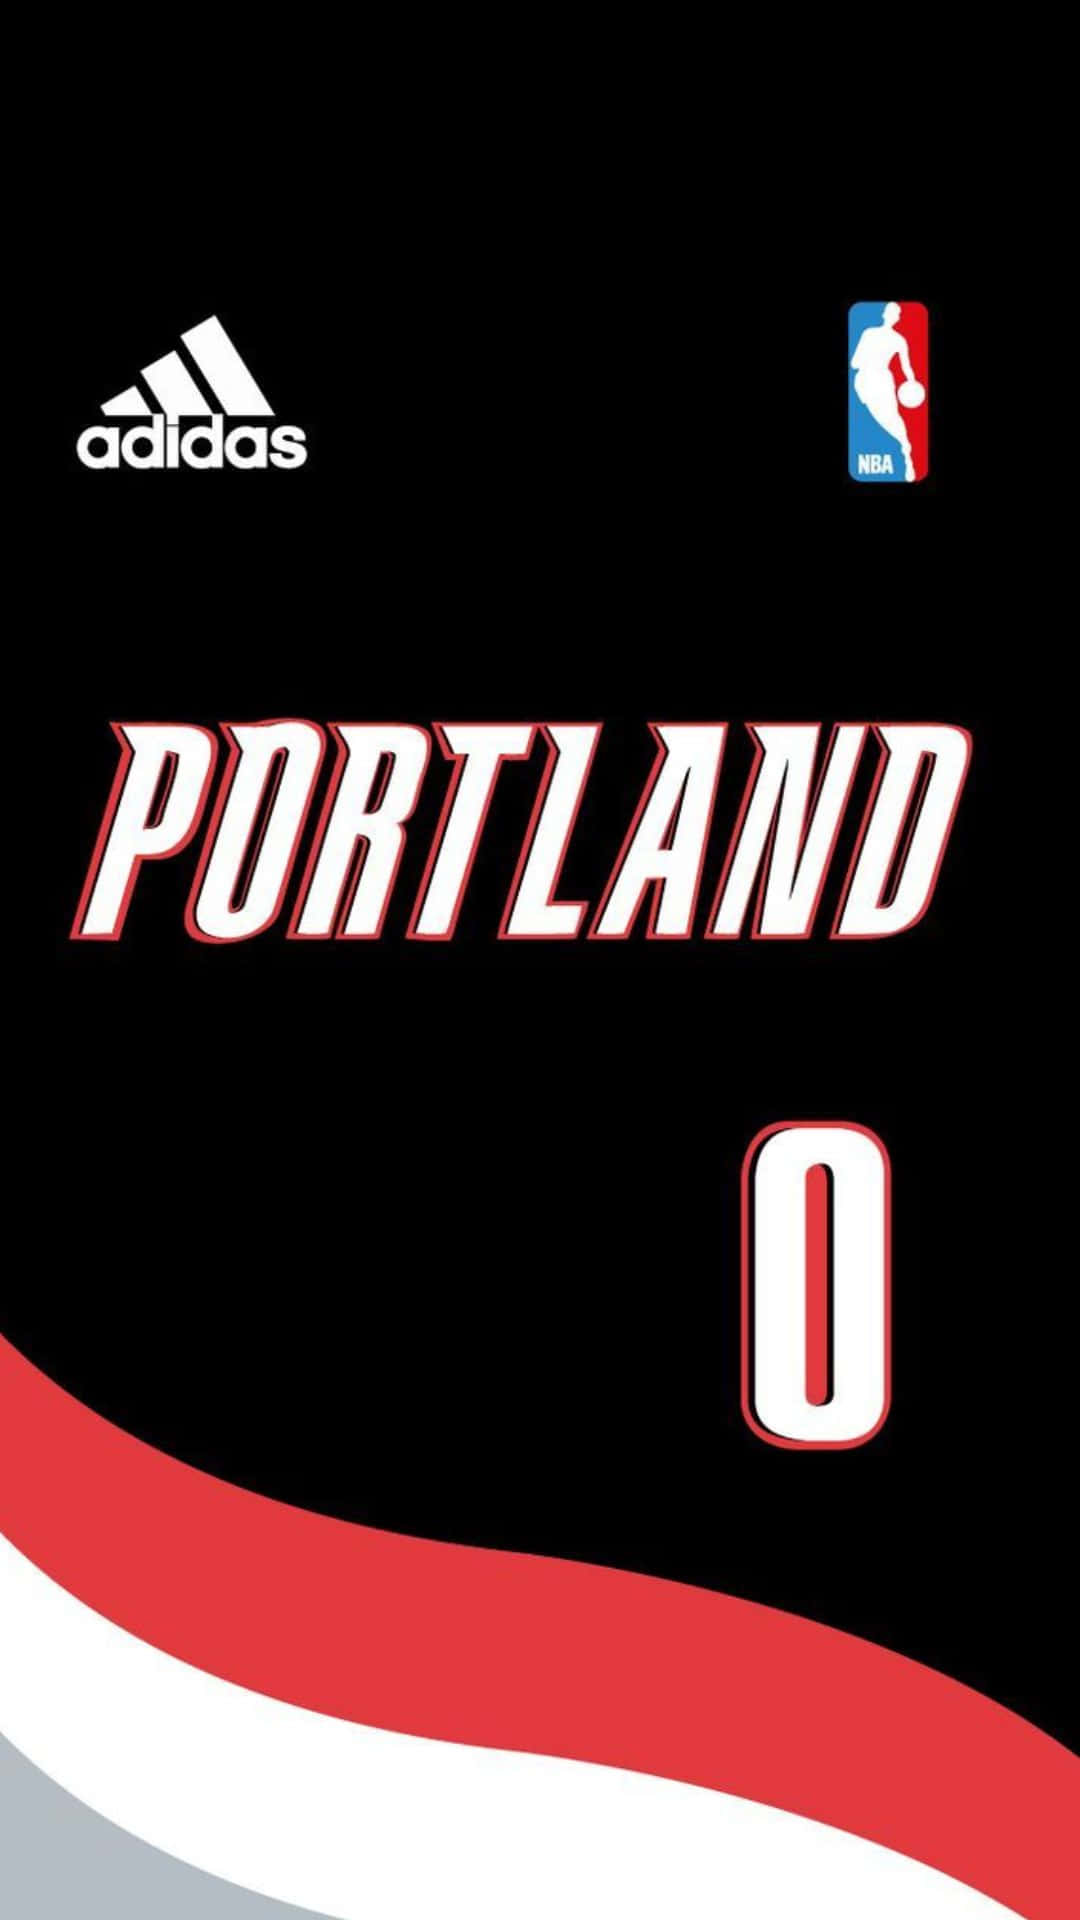 Portland Adidas N B A Jersey Design Wallpaper